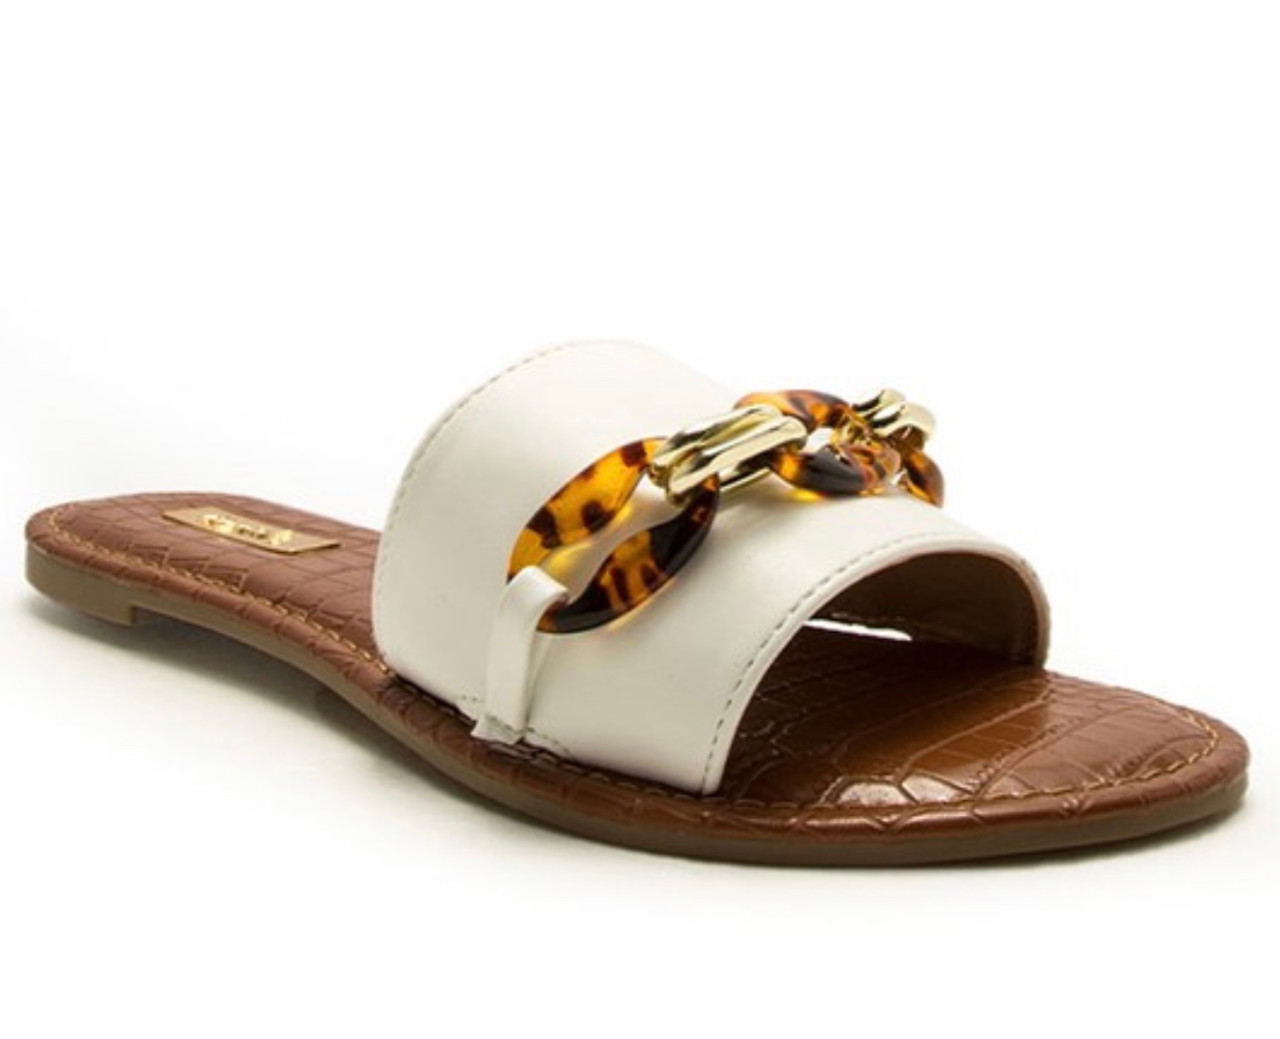 white leopard sandals